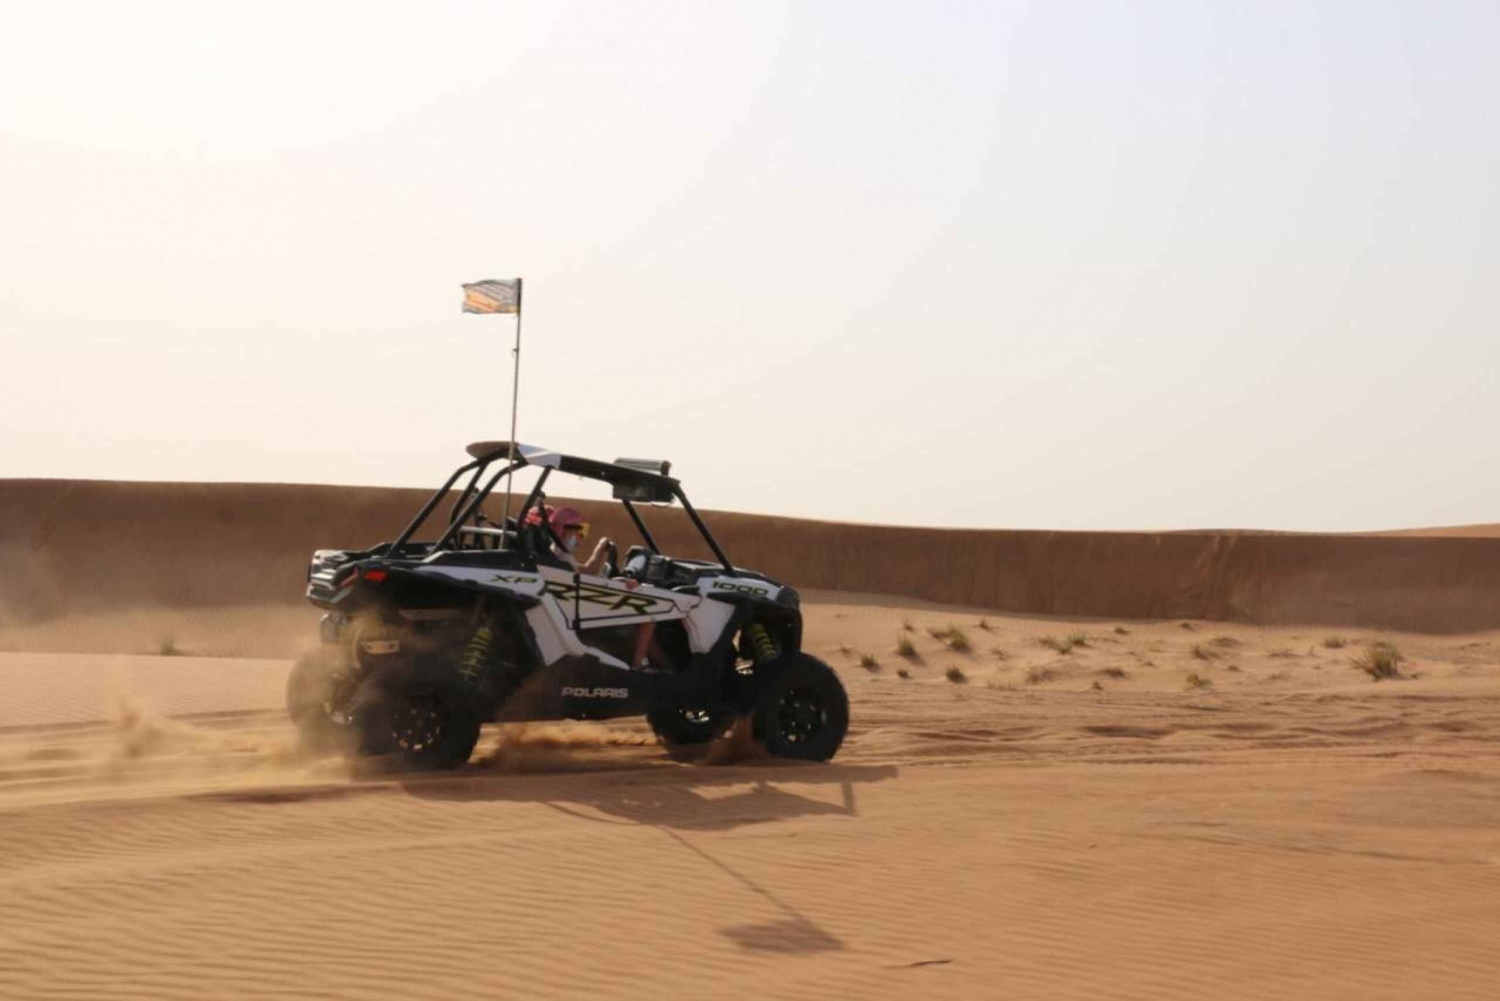 Dubai: Polaris RZR 1000 CC dune buggy